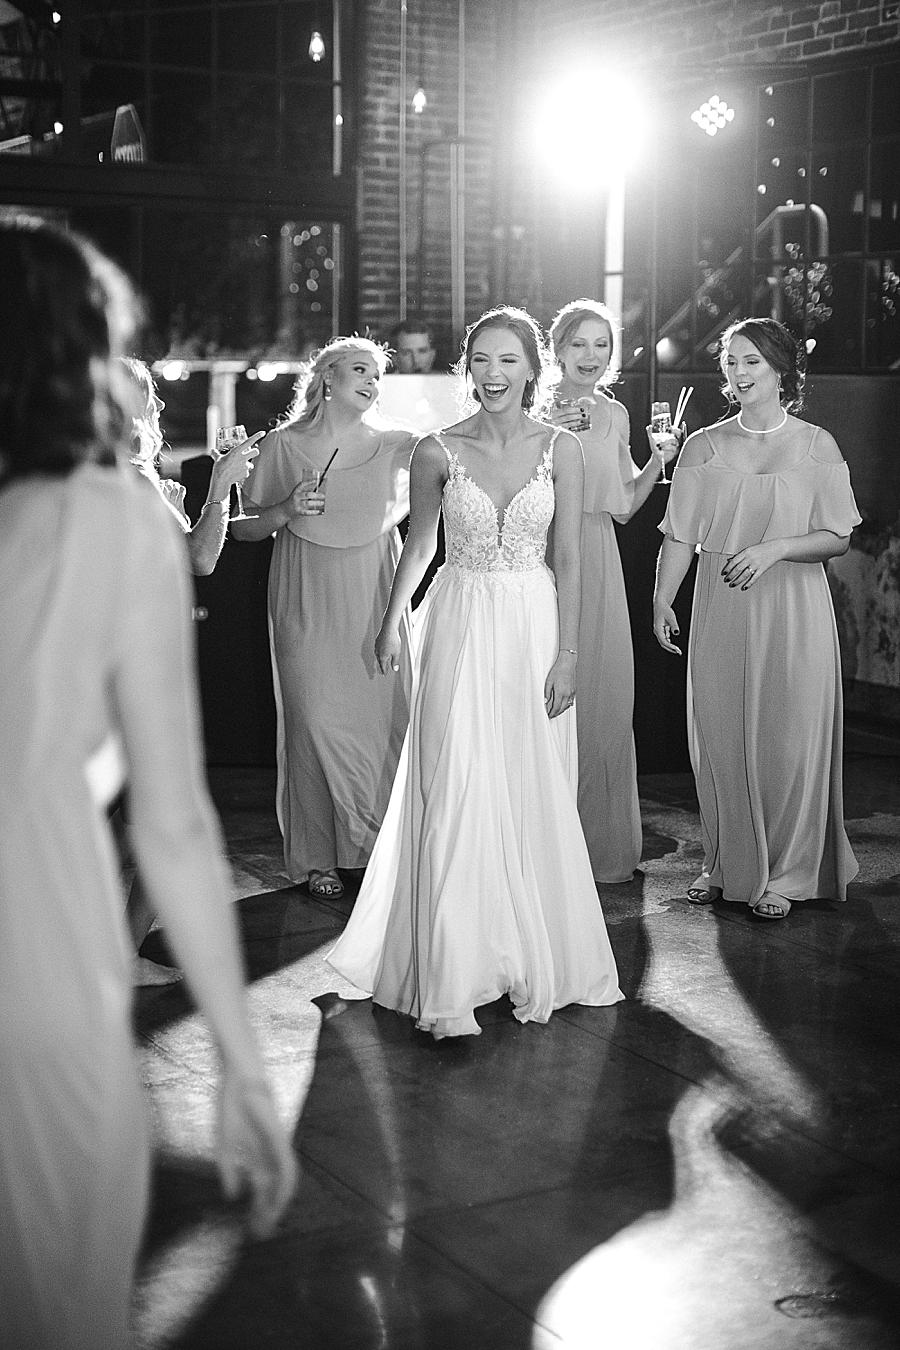 Bride and bridesmaids by Knoxville Wedding Photographer, Amanda May Photos.